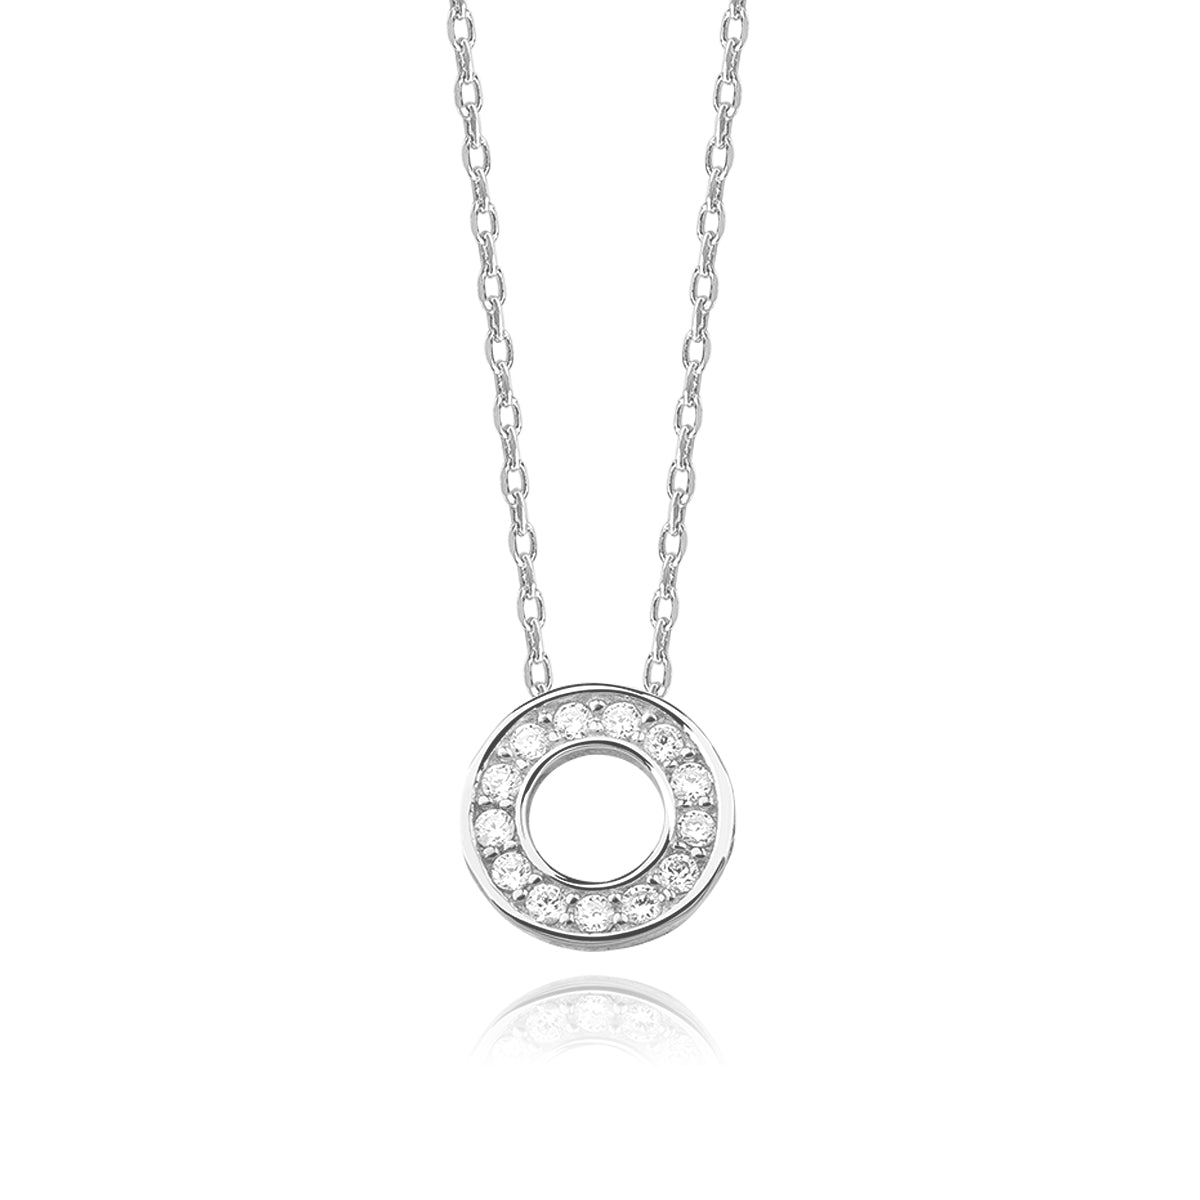 Silver Necklace with Circular Pendant